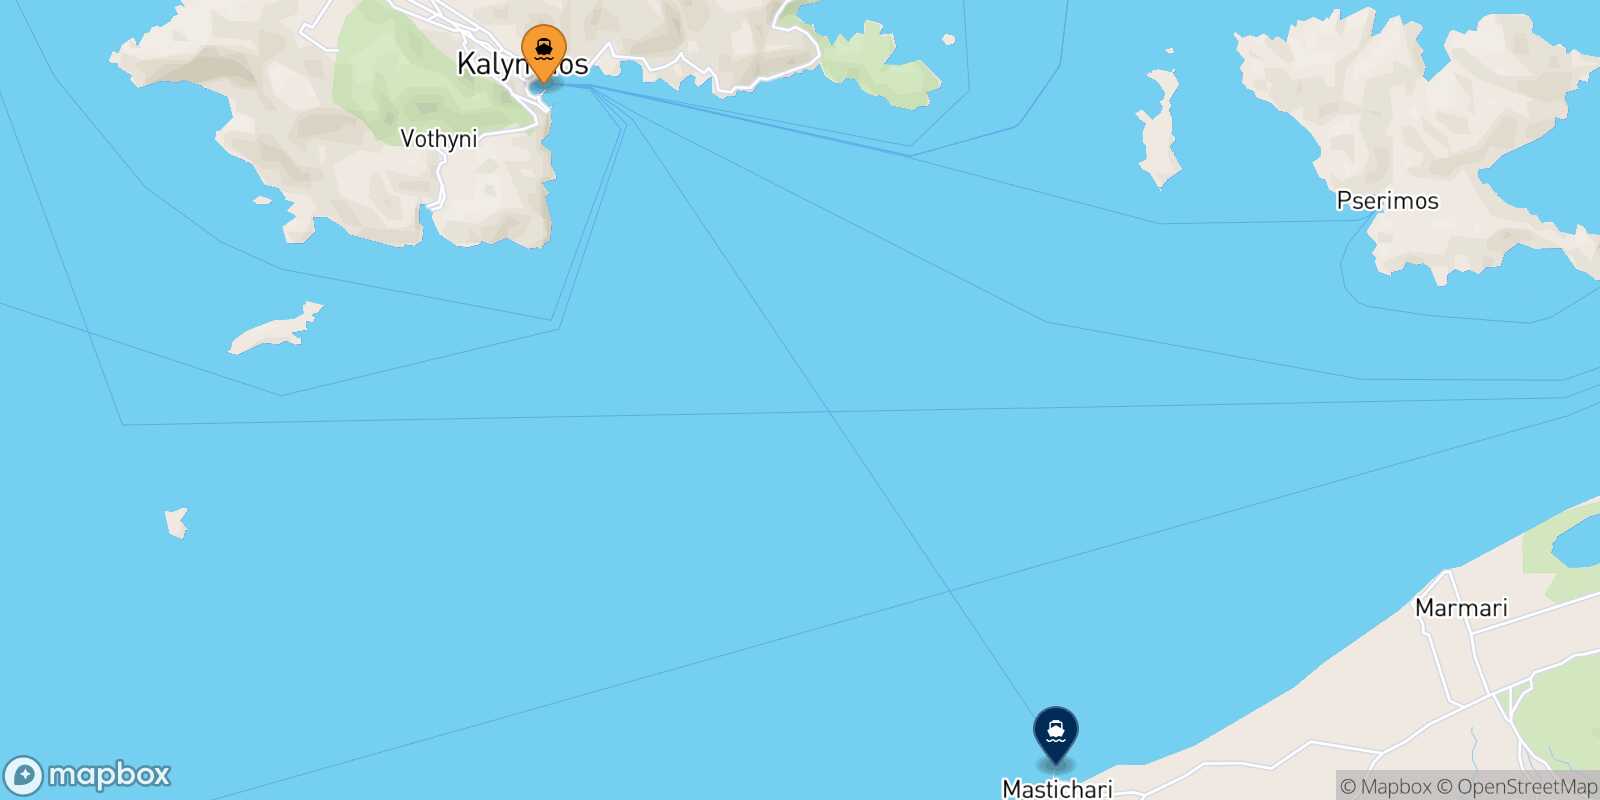 Kalymnos Pserimos route map